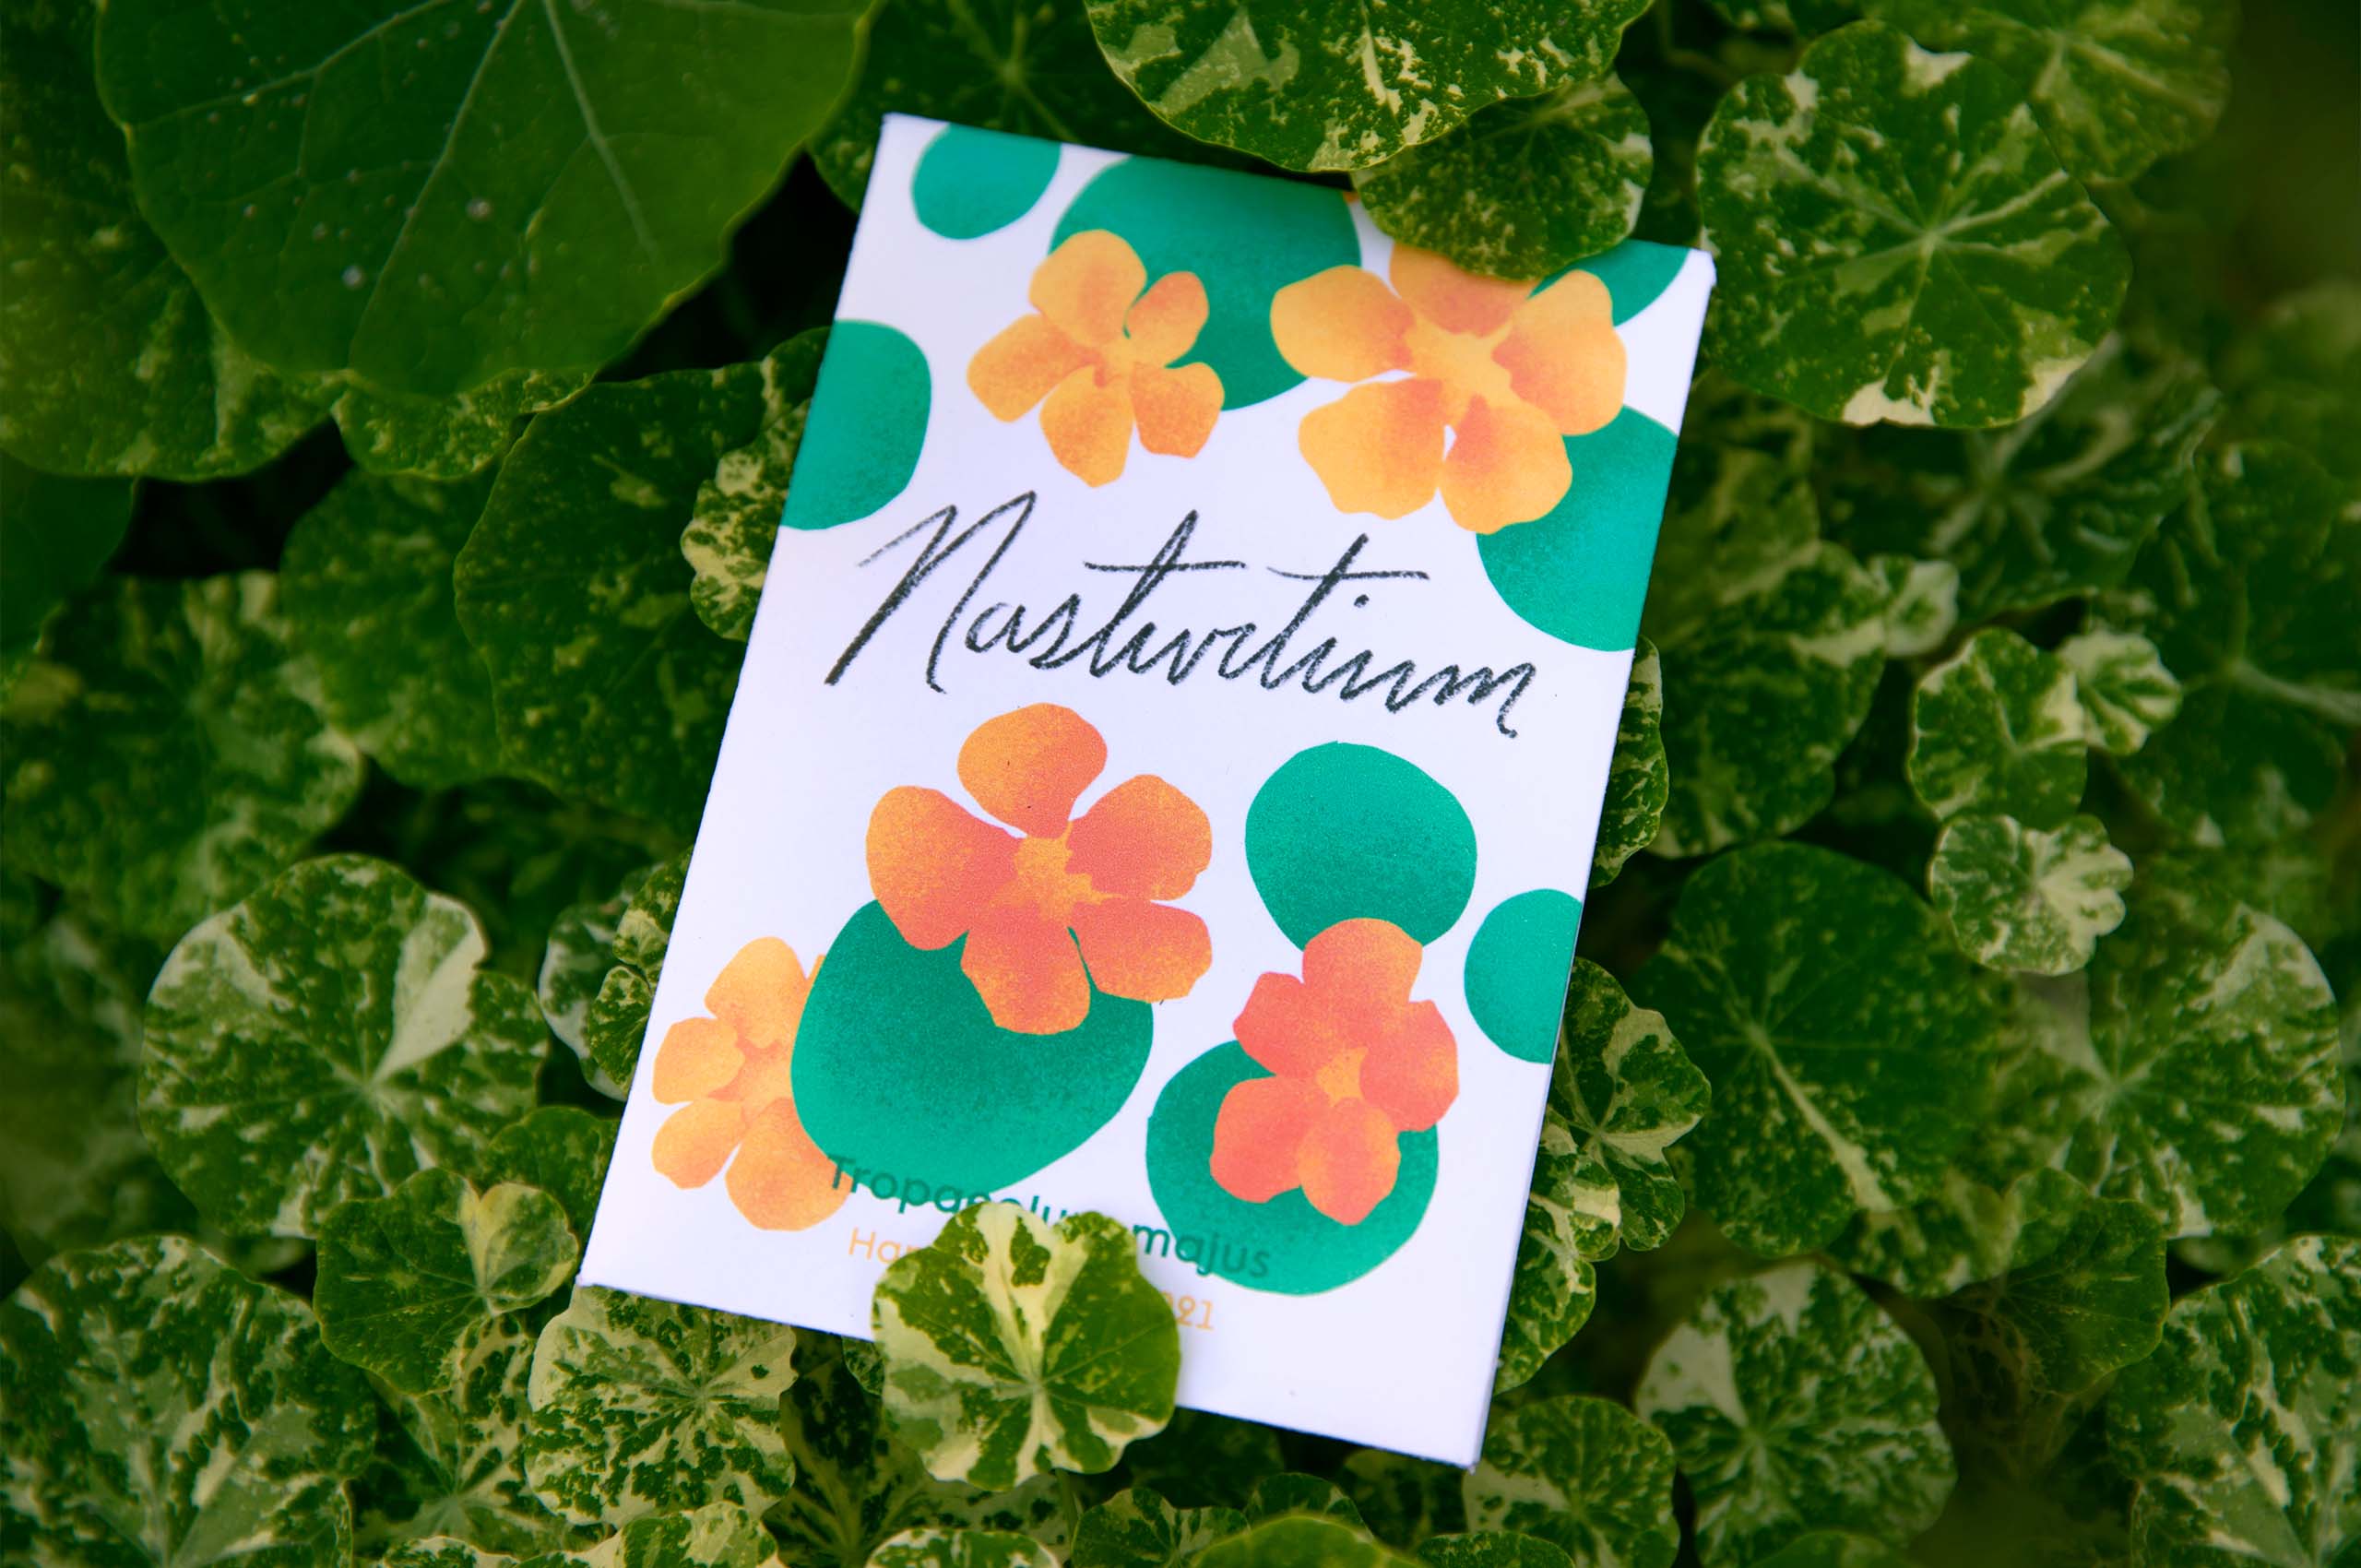 Nasturtium illustration and seed packet design